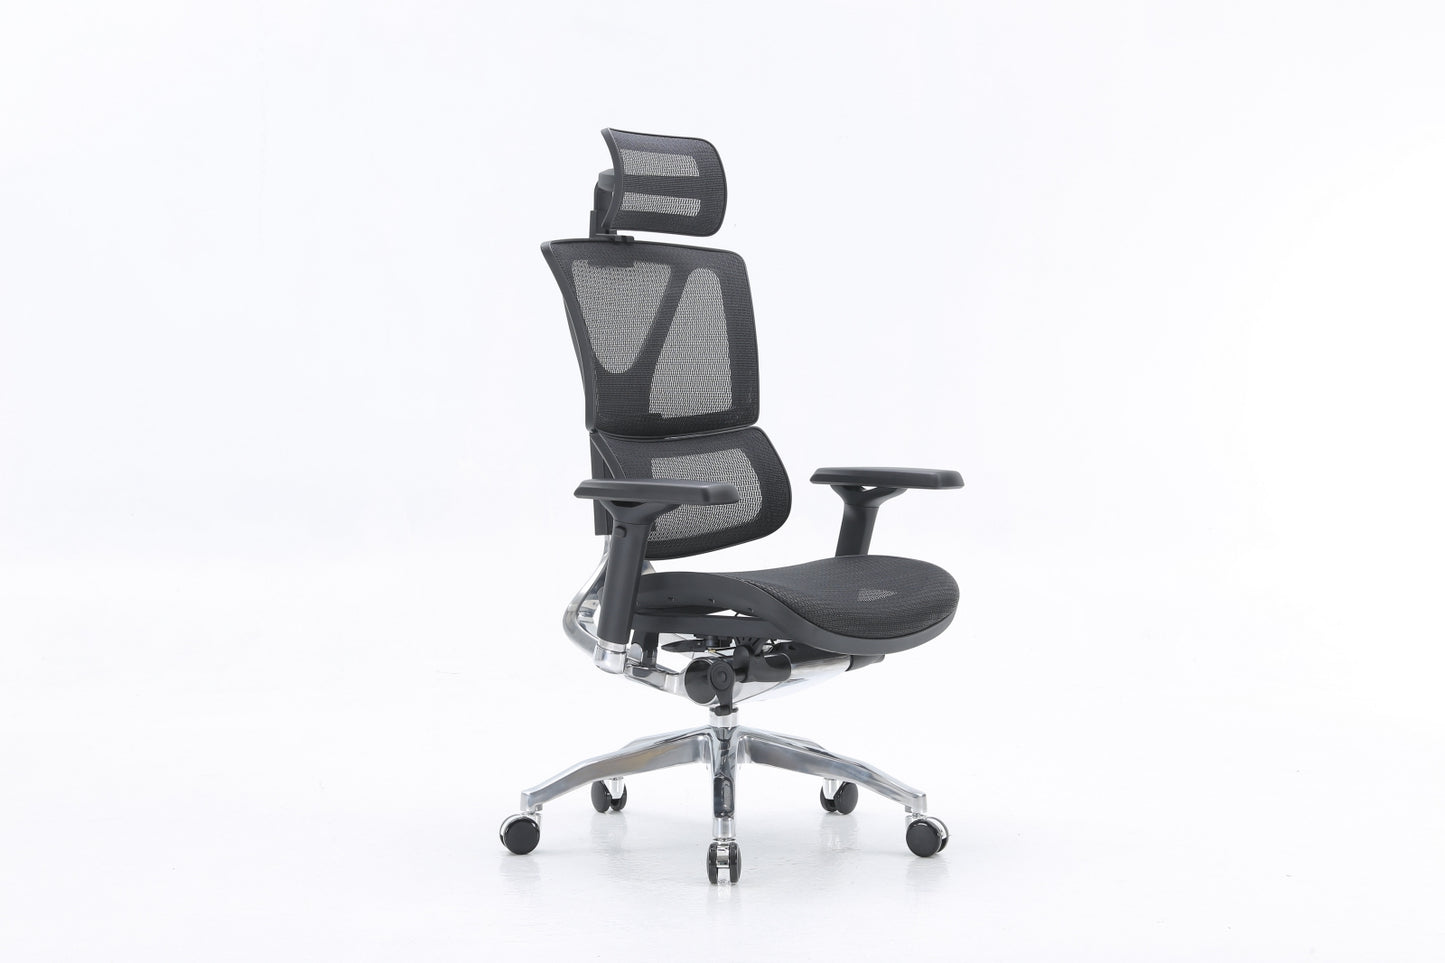 Sihoo M25 Ergonomic Chair